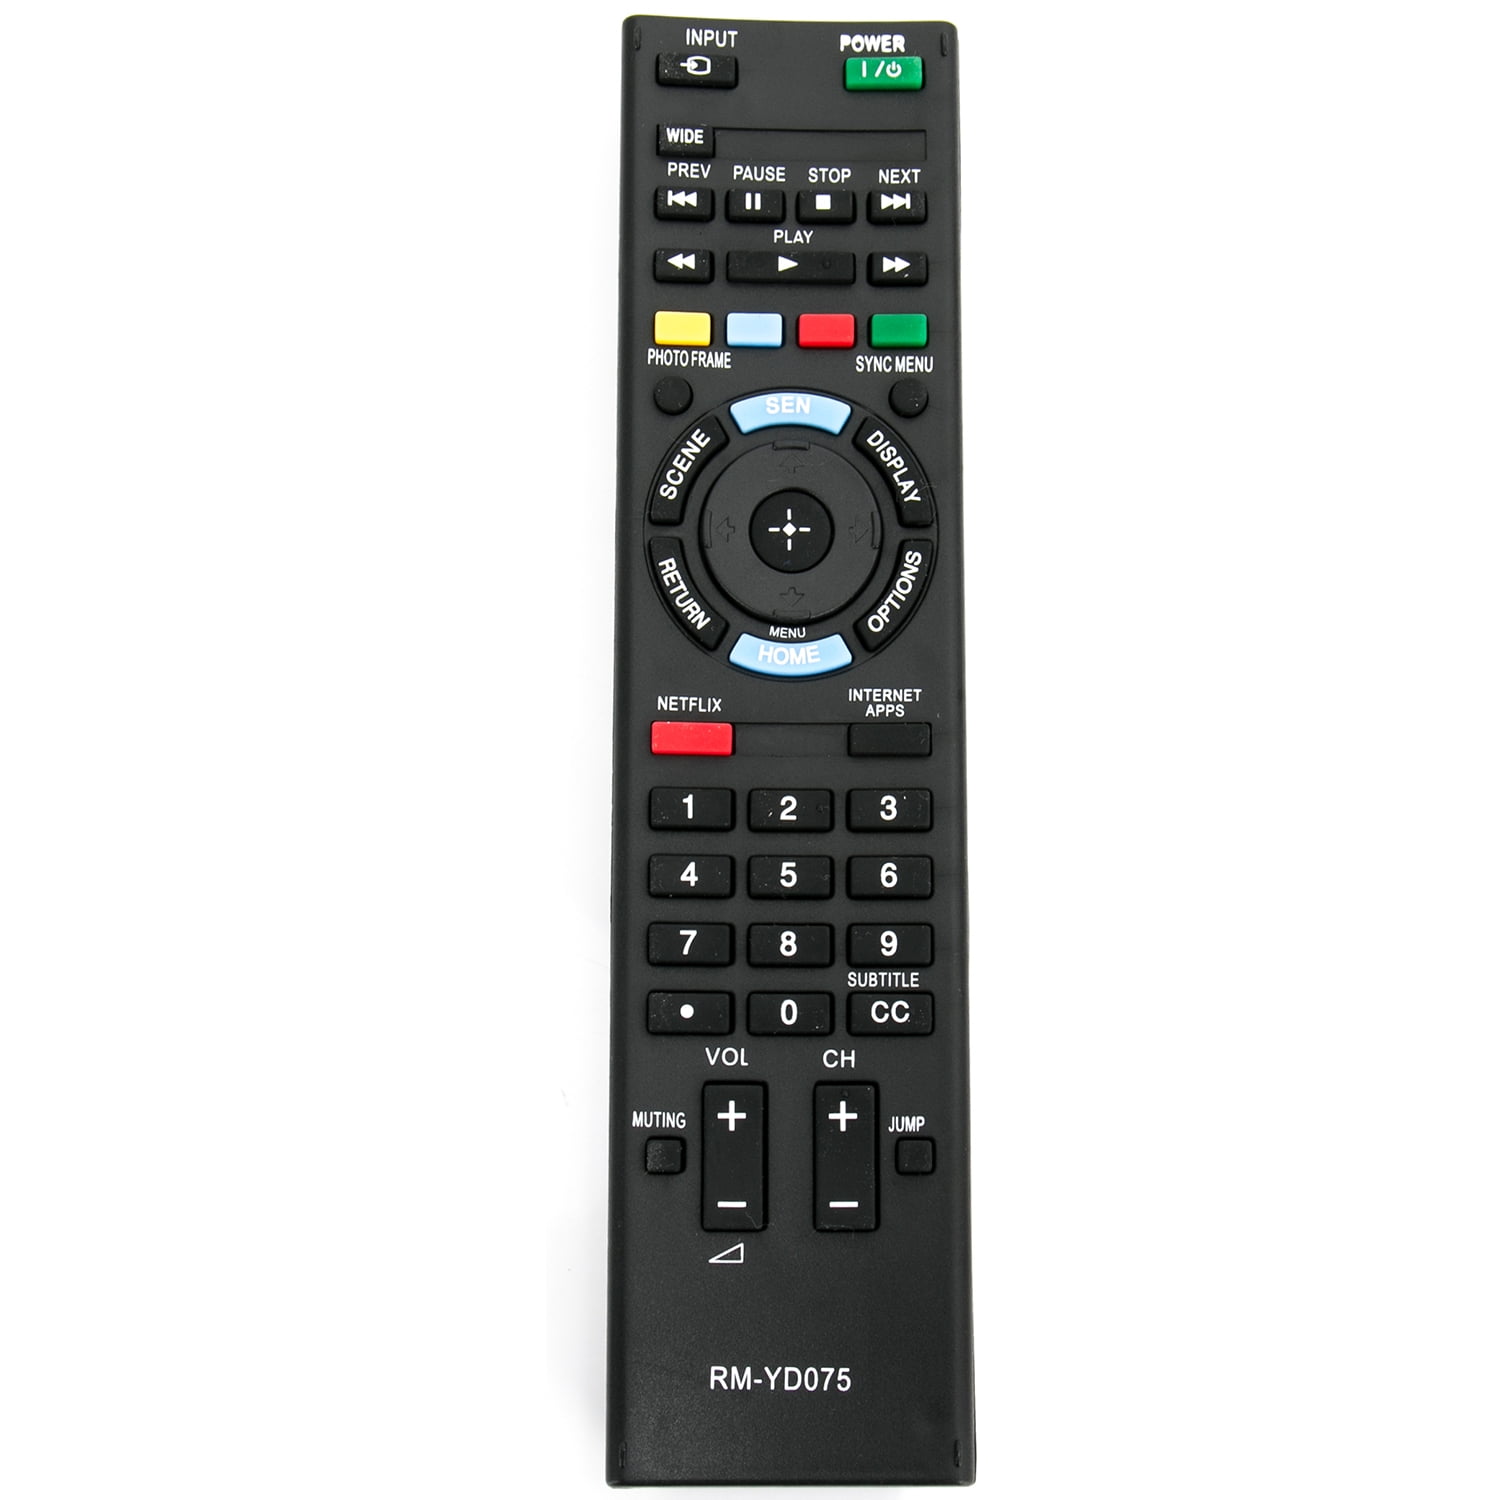 Remote Control for Sony TV KDL-40BX450 KDL-40BX450 Remote Fast Ship 